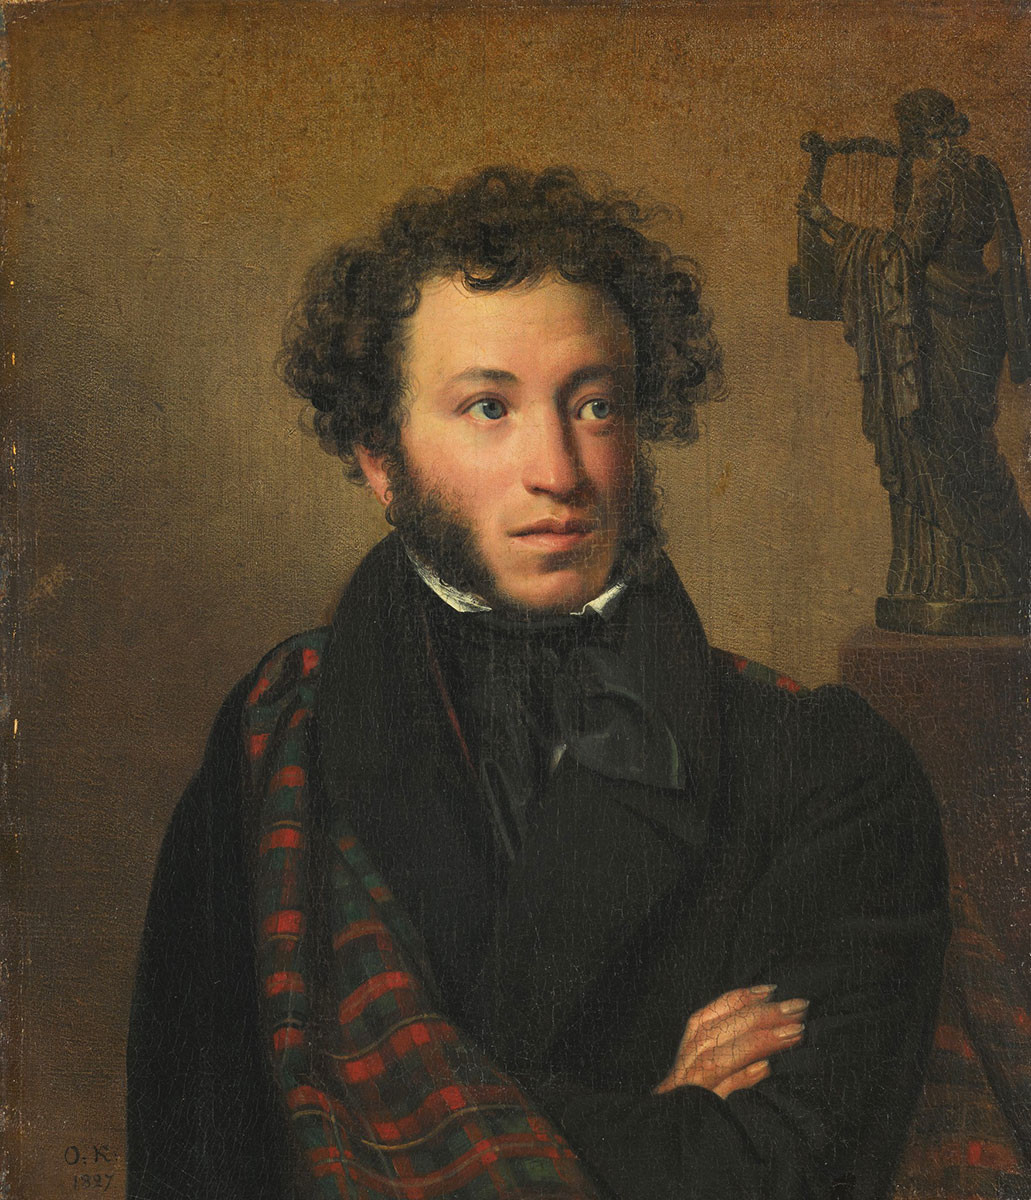 Portrait of Alexander Pushkin, by Orest Kiprensky, 1827.